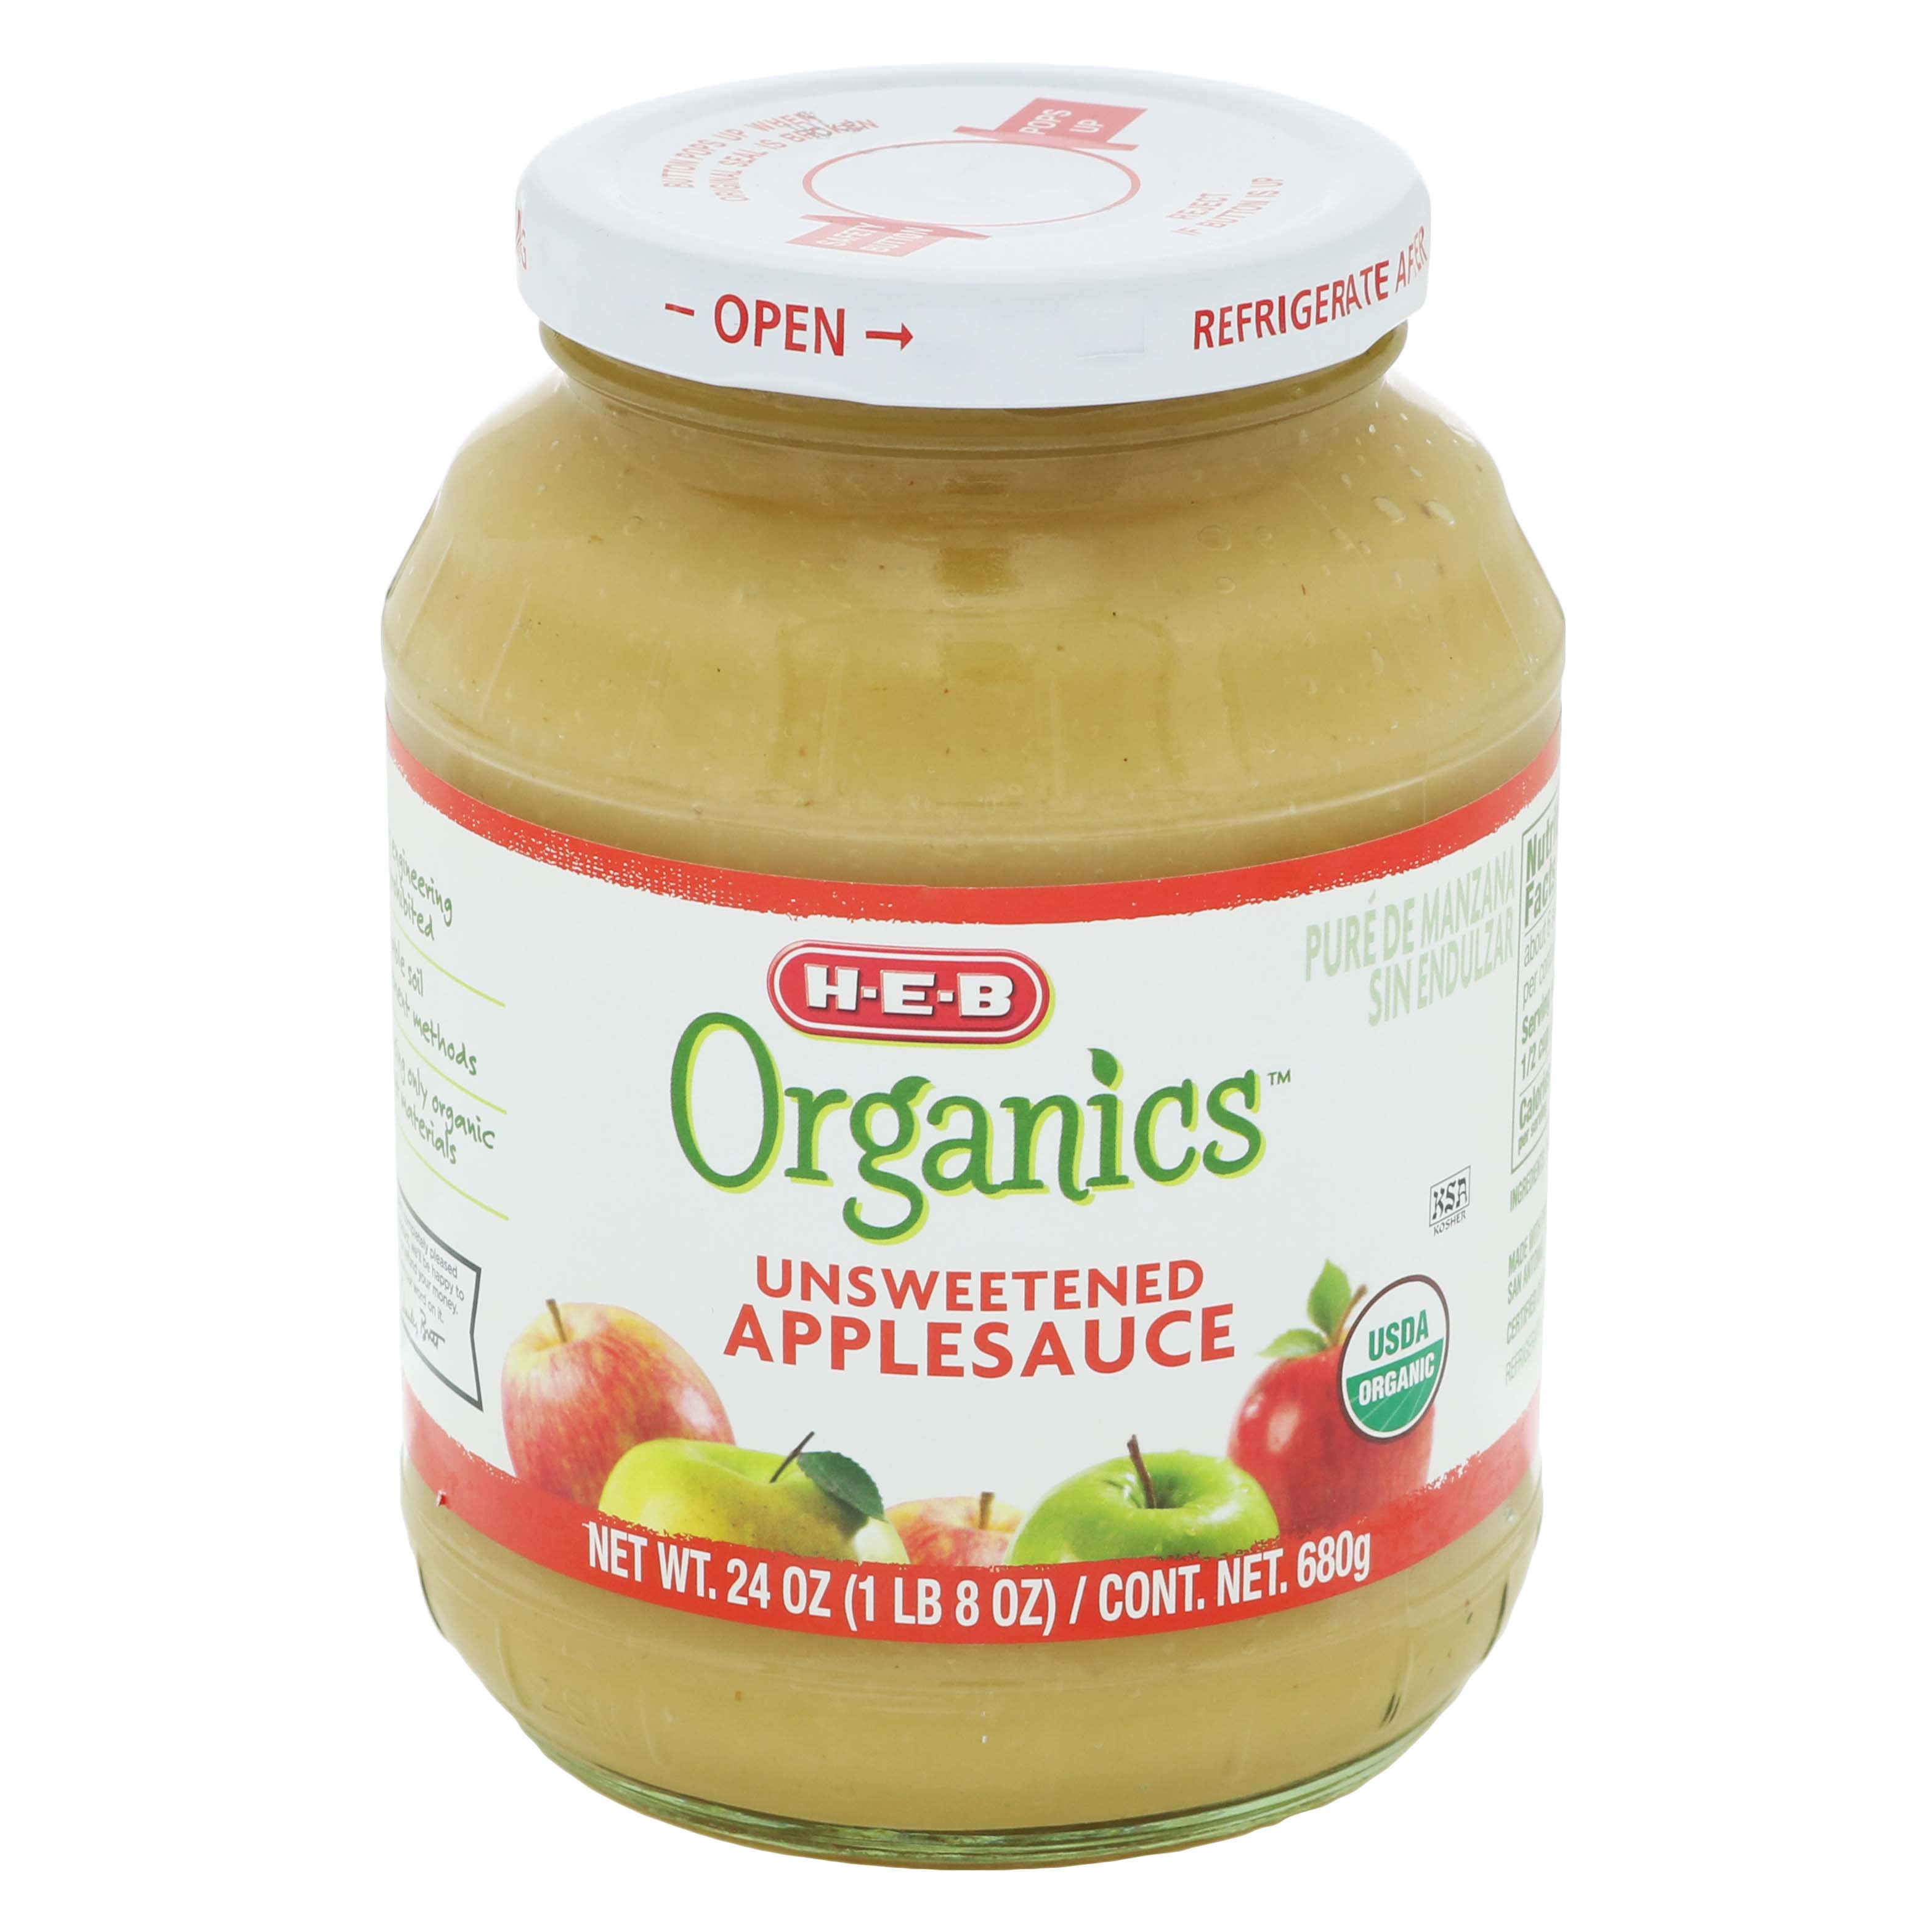 H E B Organics Unsweetened Apple Sauce Jar Shop Fruit At H E B